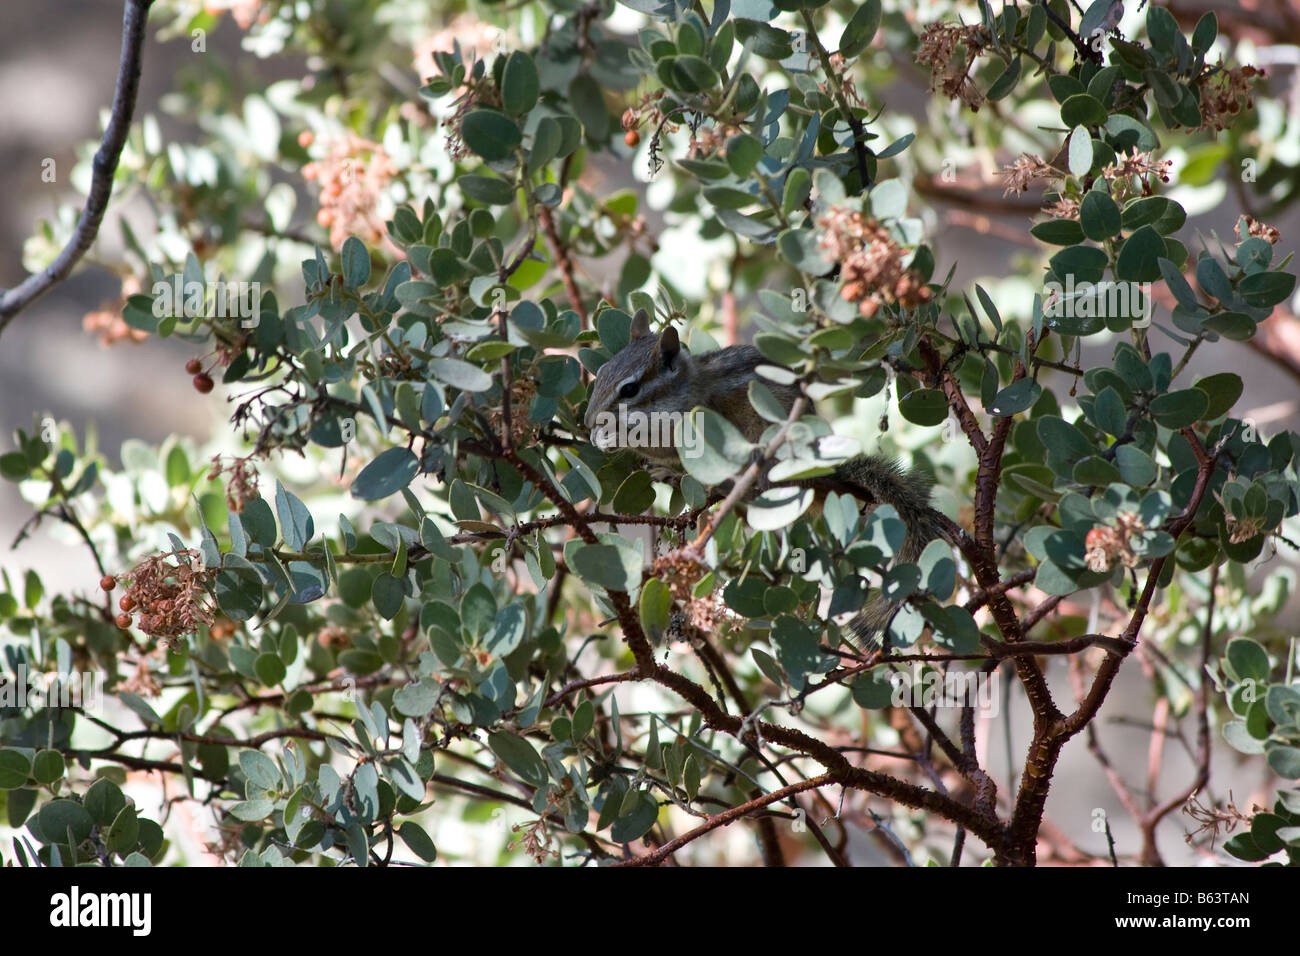 Scoiattolo striado roditura manzaneta sul genere Arctostaphylos bush berrys sementi Foto Stock